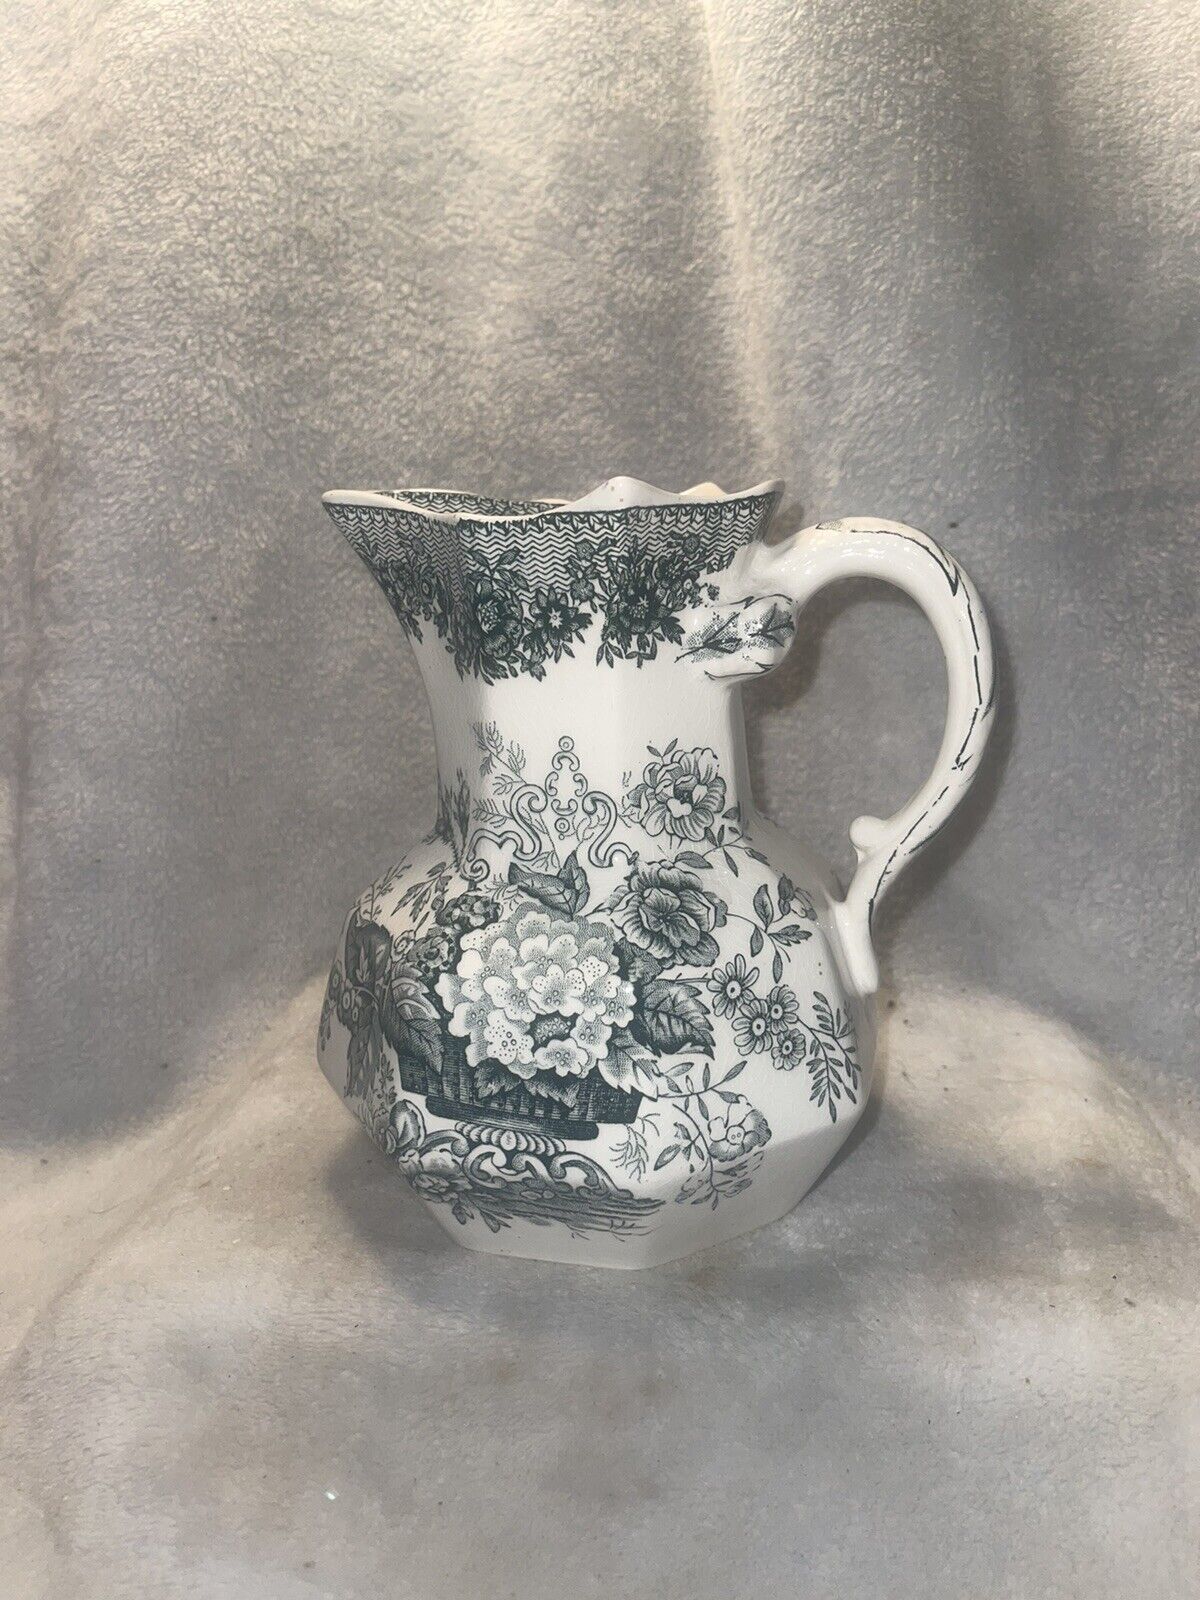 Vintage Masons Transferware ironstone pitcher / Green floral design ENGLAND